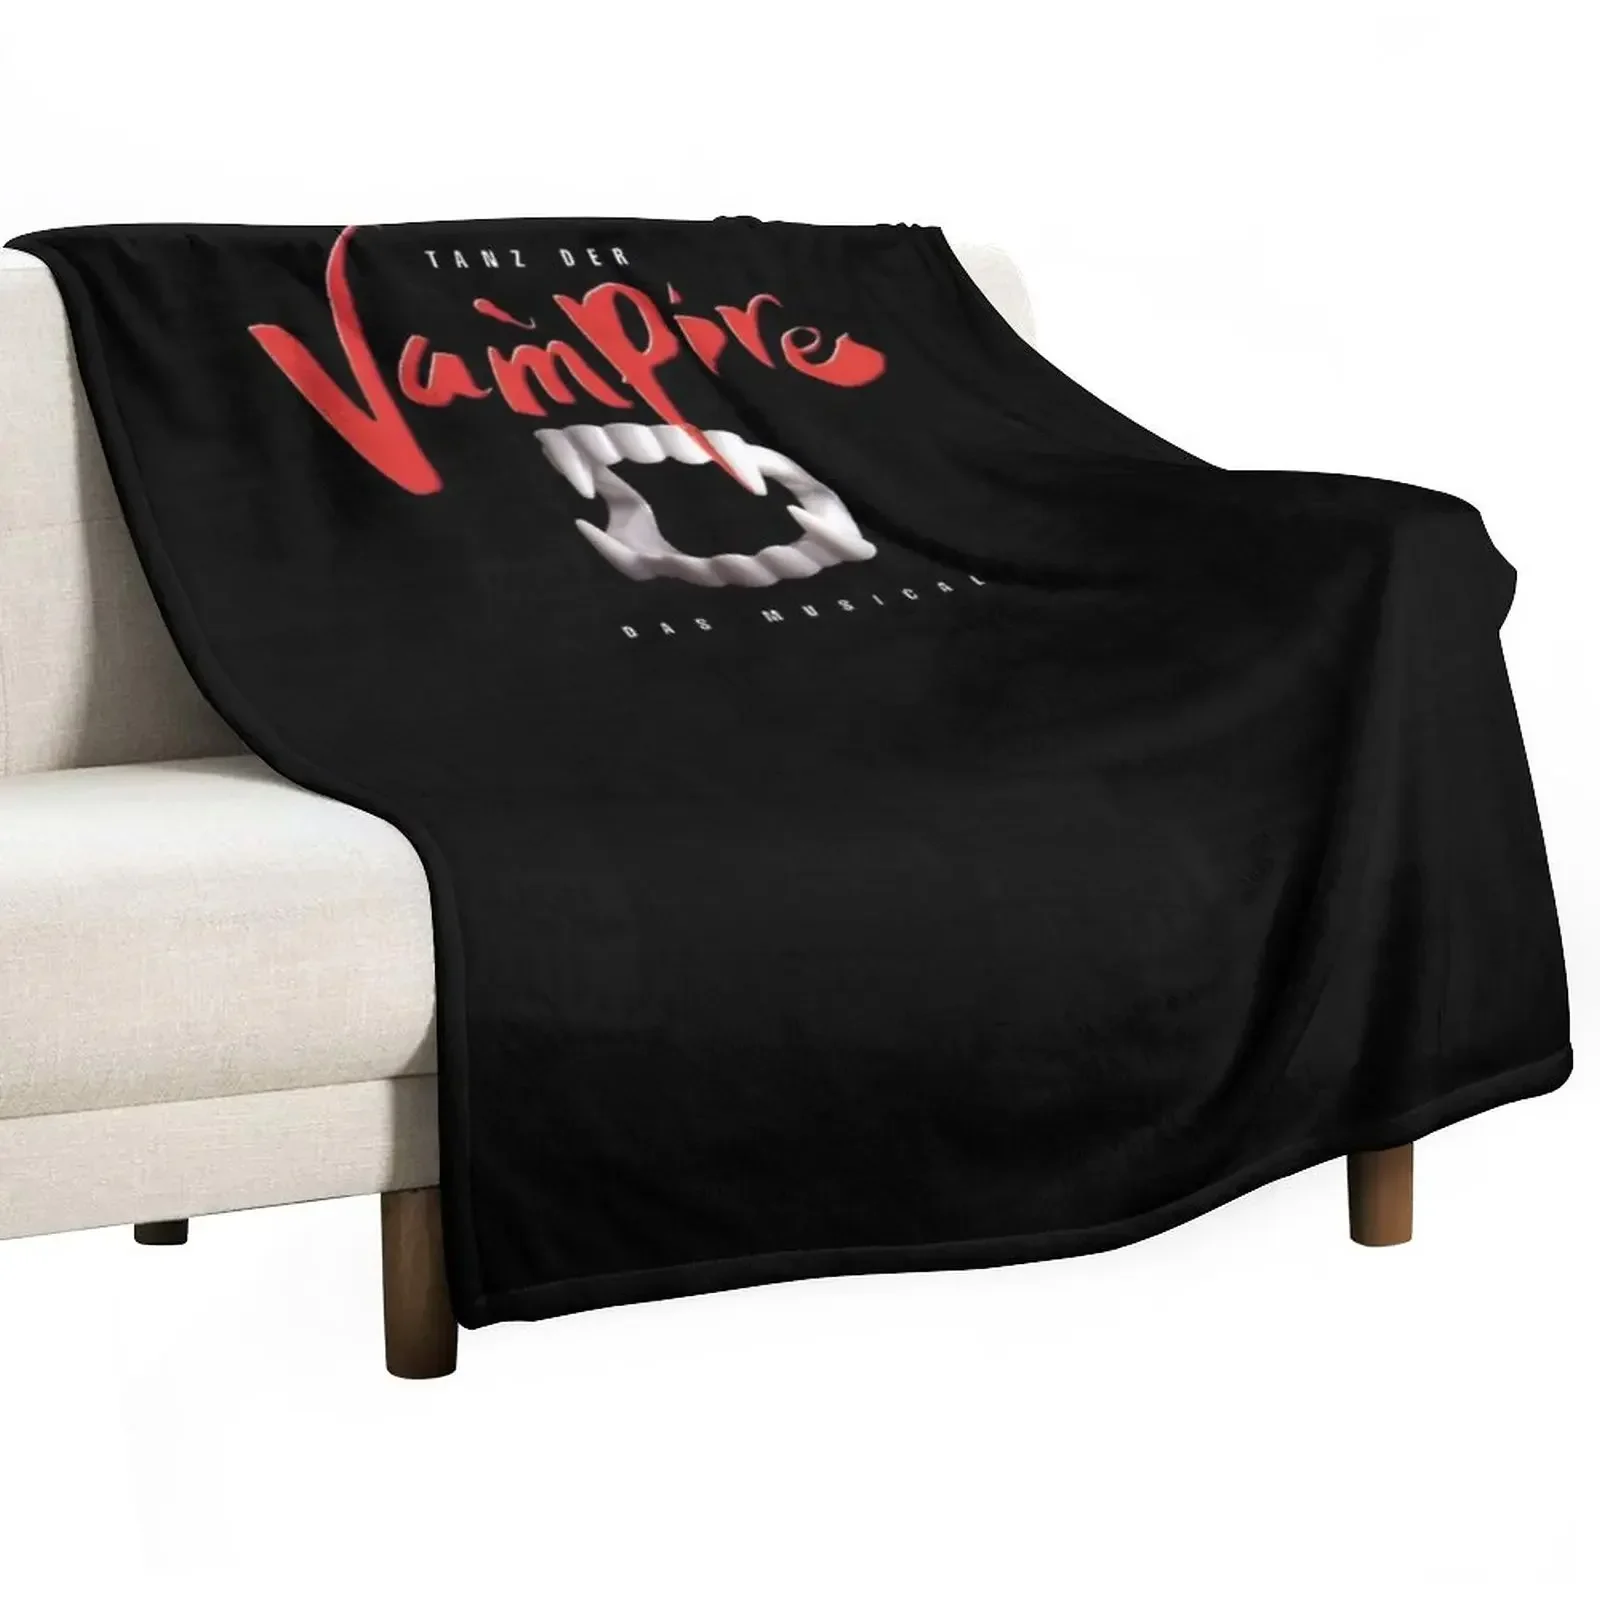 

Tanz der Vampire Throw Blanket Quilt for babies Designers Furrys Blankets